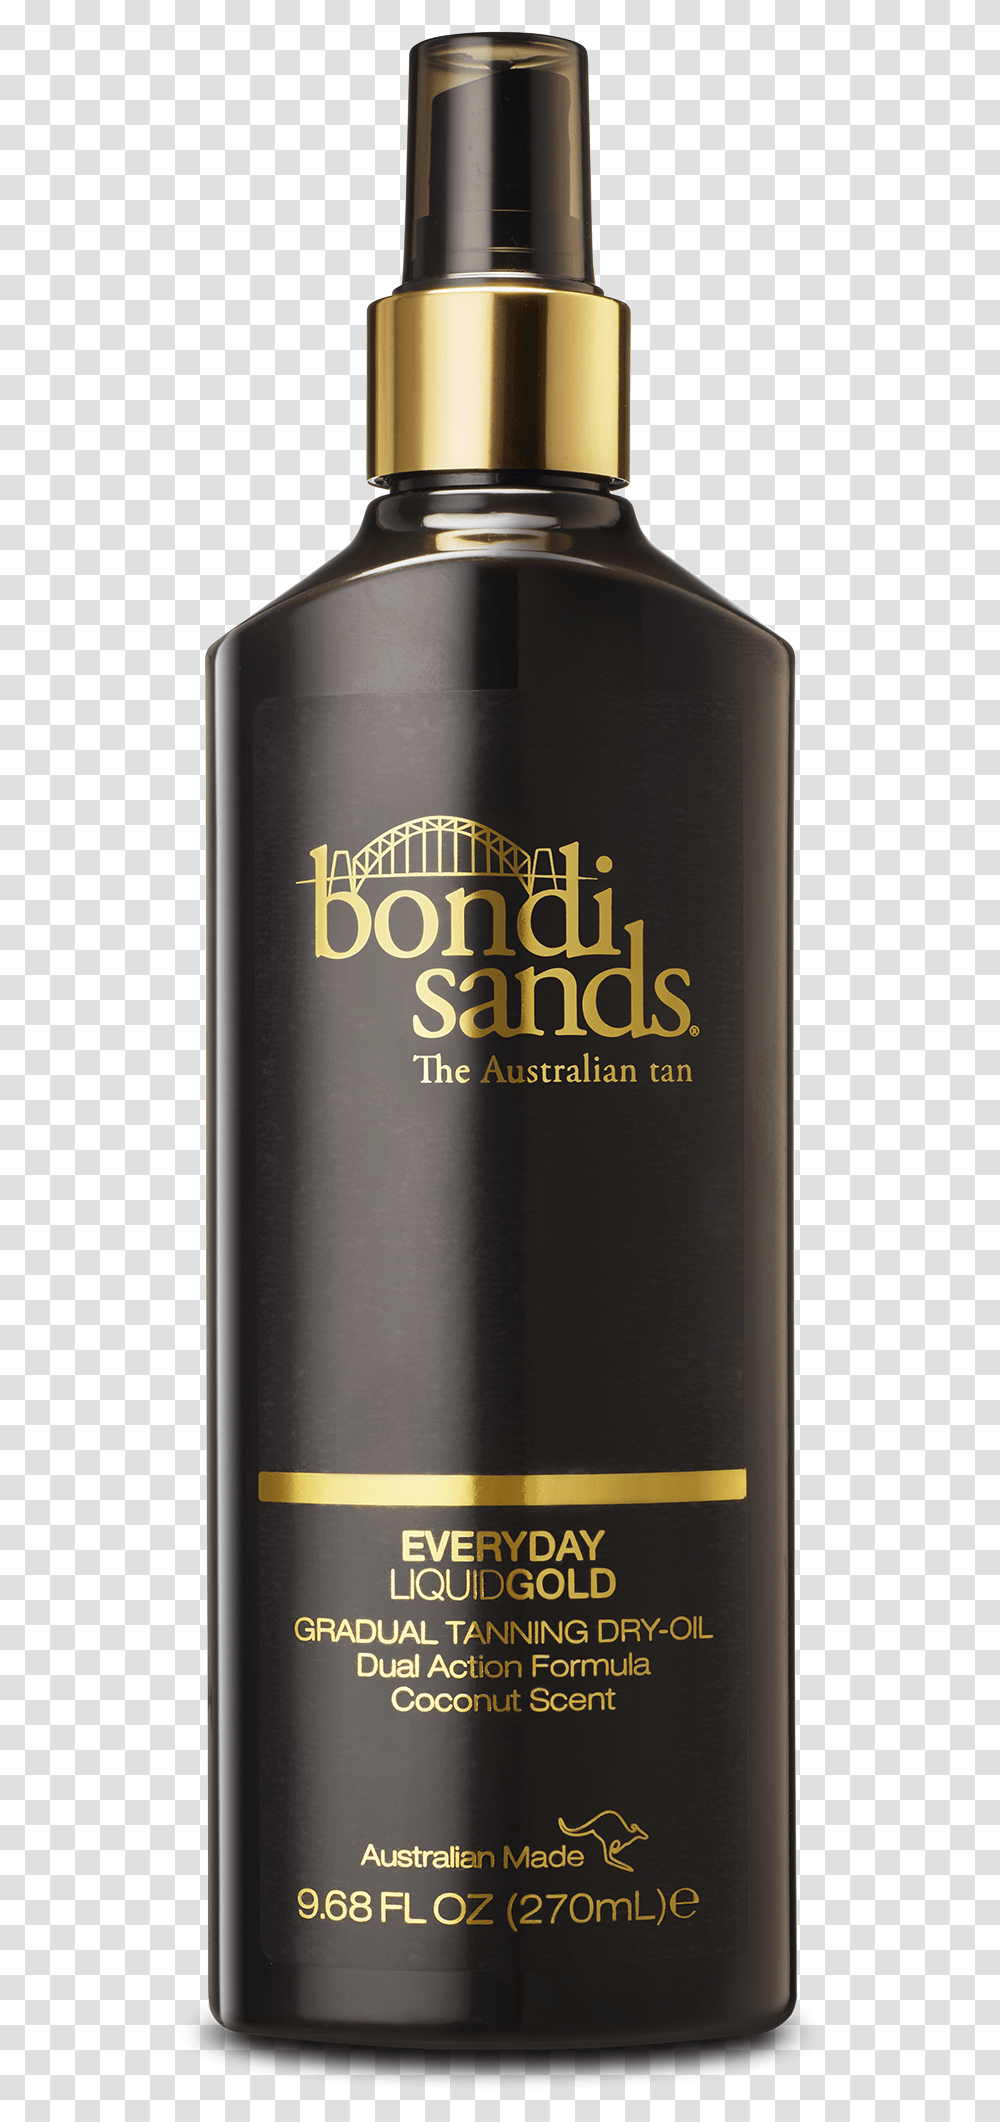 Bondi Sands Liquid Gold Everyday Gradual Tanning Oil Bondi Sands Everyday Liquid Gold, Bottle, Tin, Can, Aluminium Transparent Png